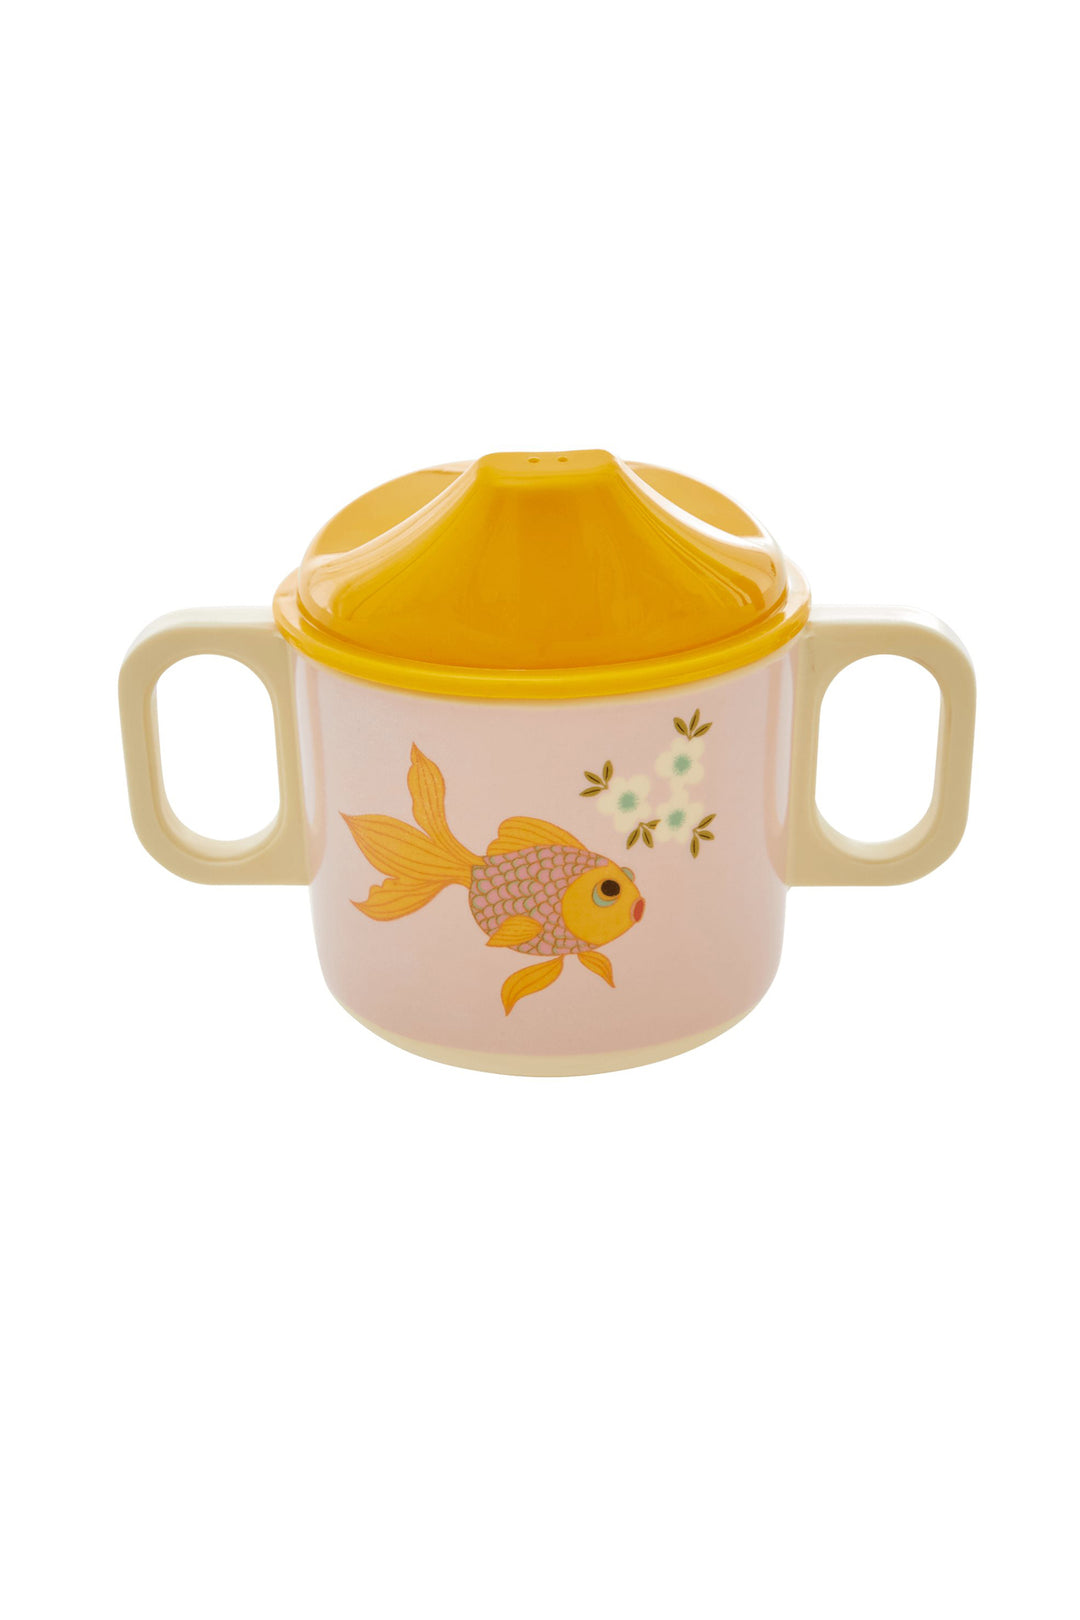 Goldfish Print 2 Handle Melamine Baby Cup